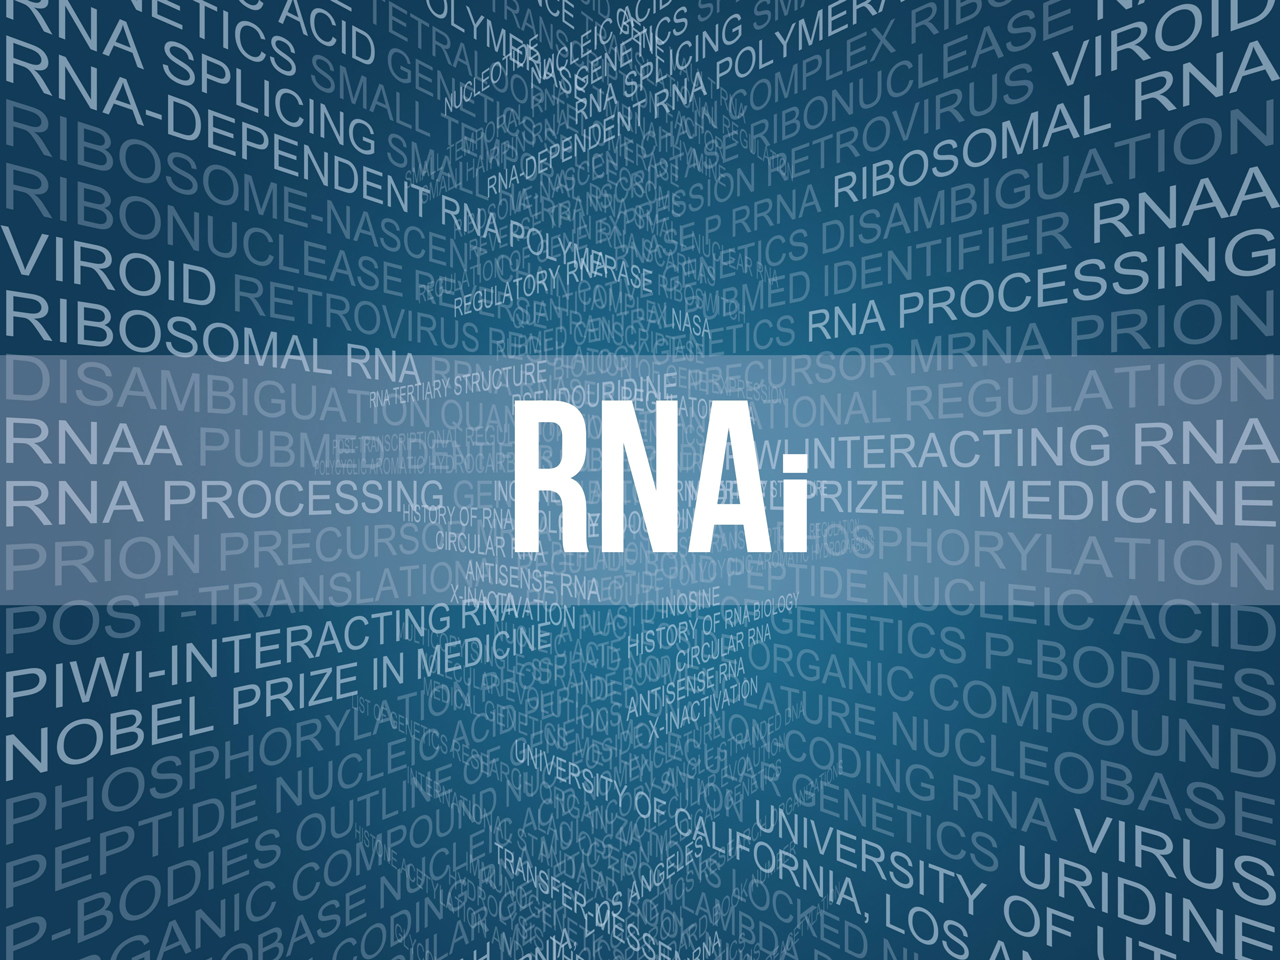 RNA Interference in Mammalian Cells